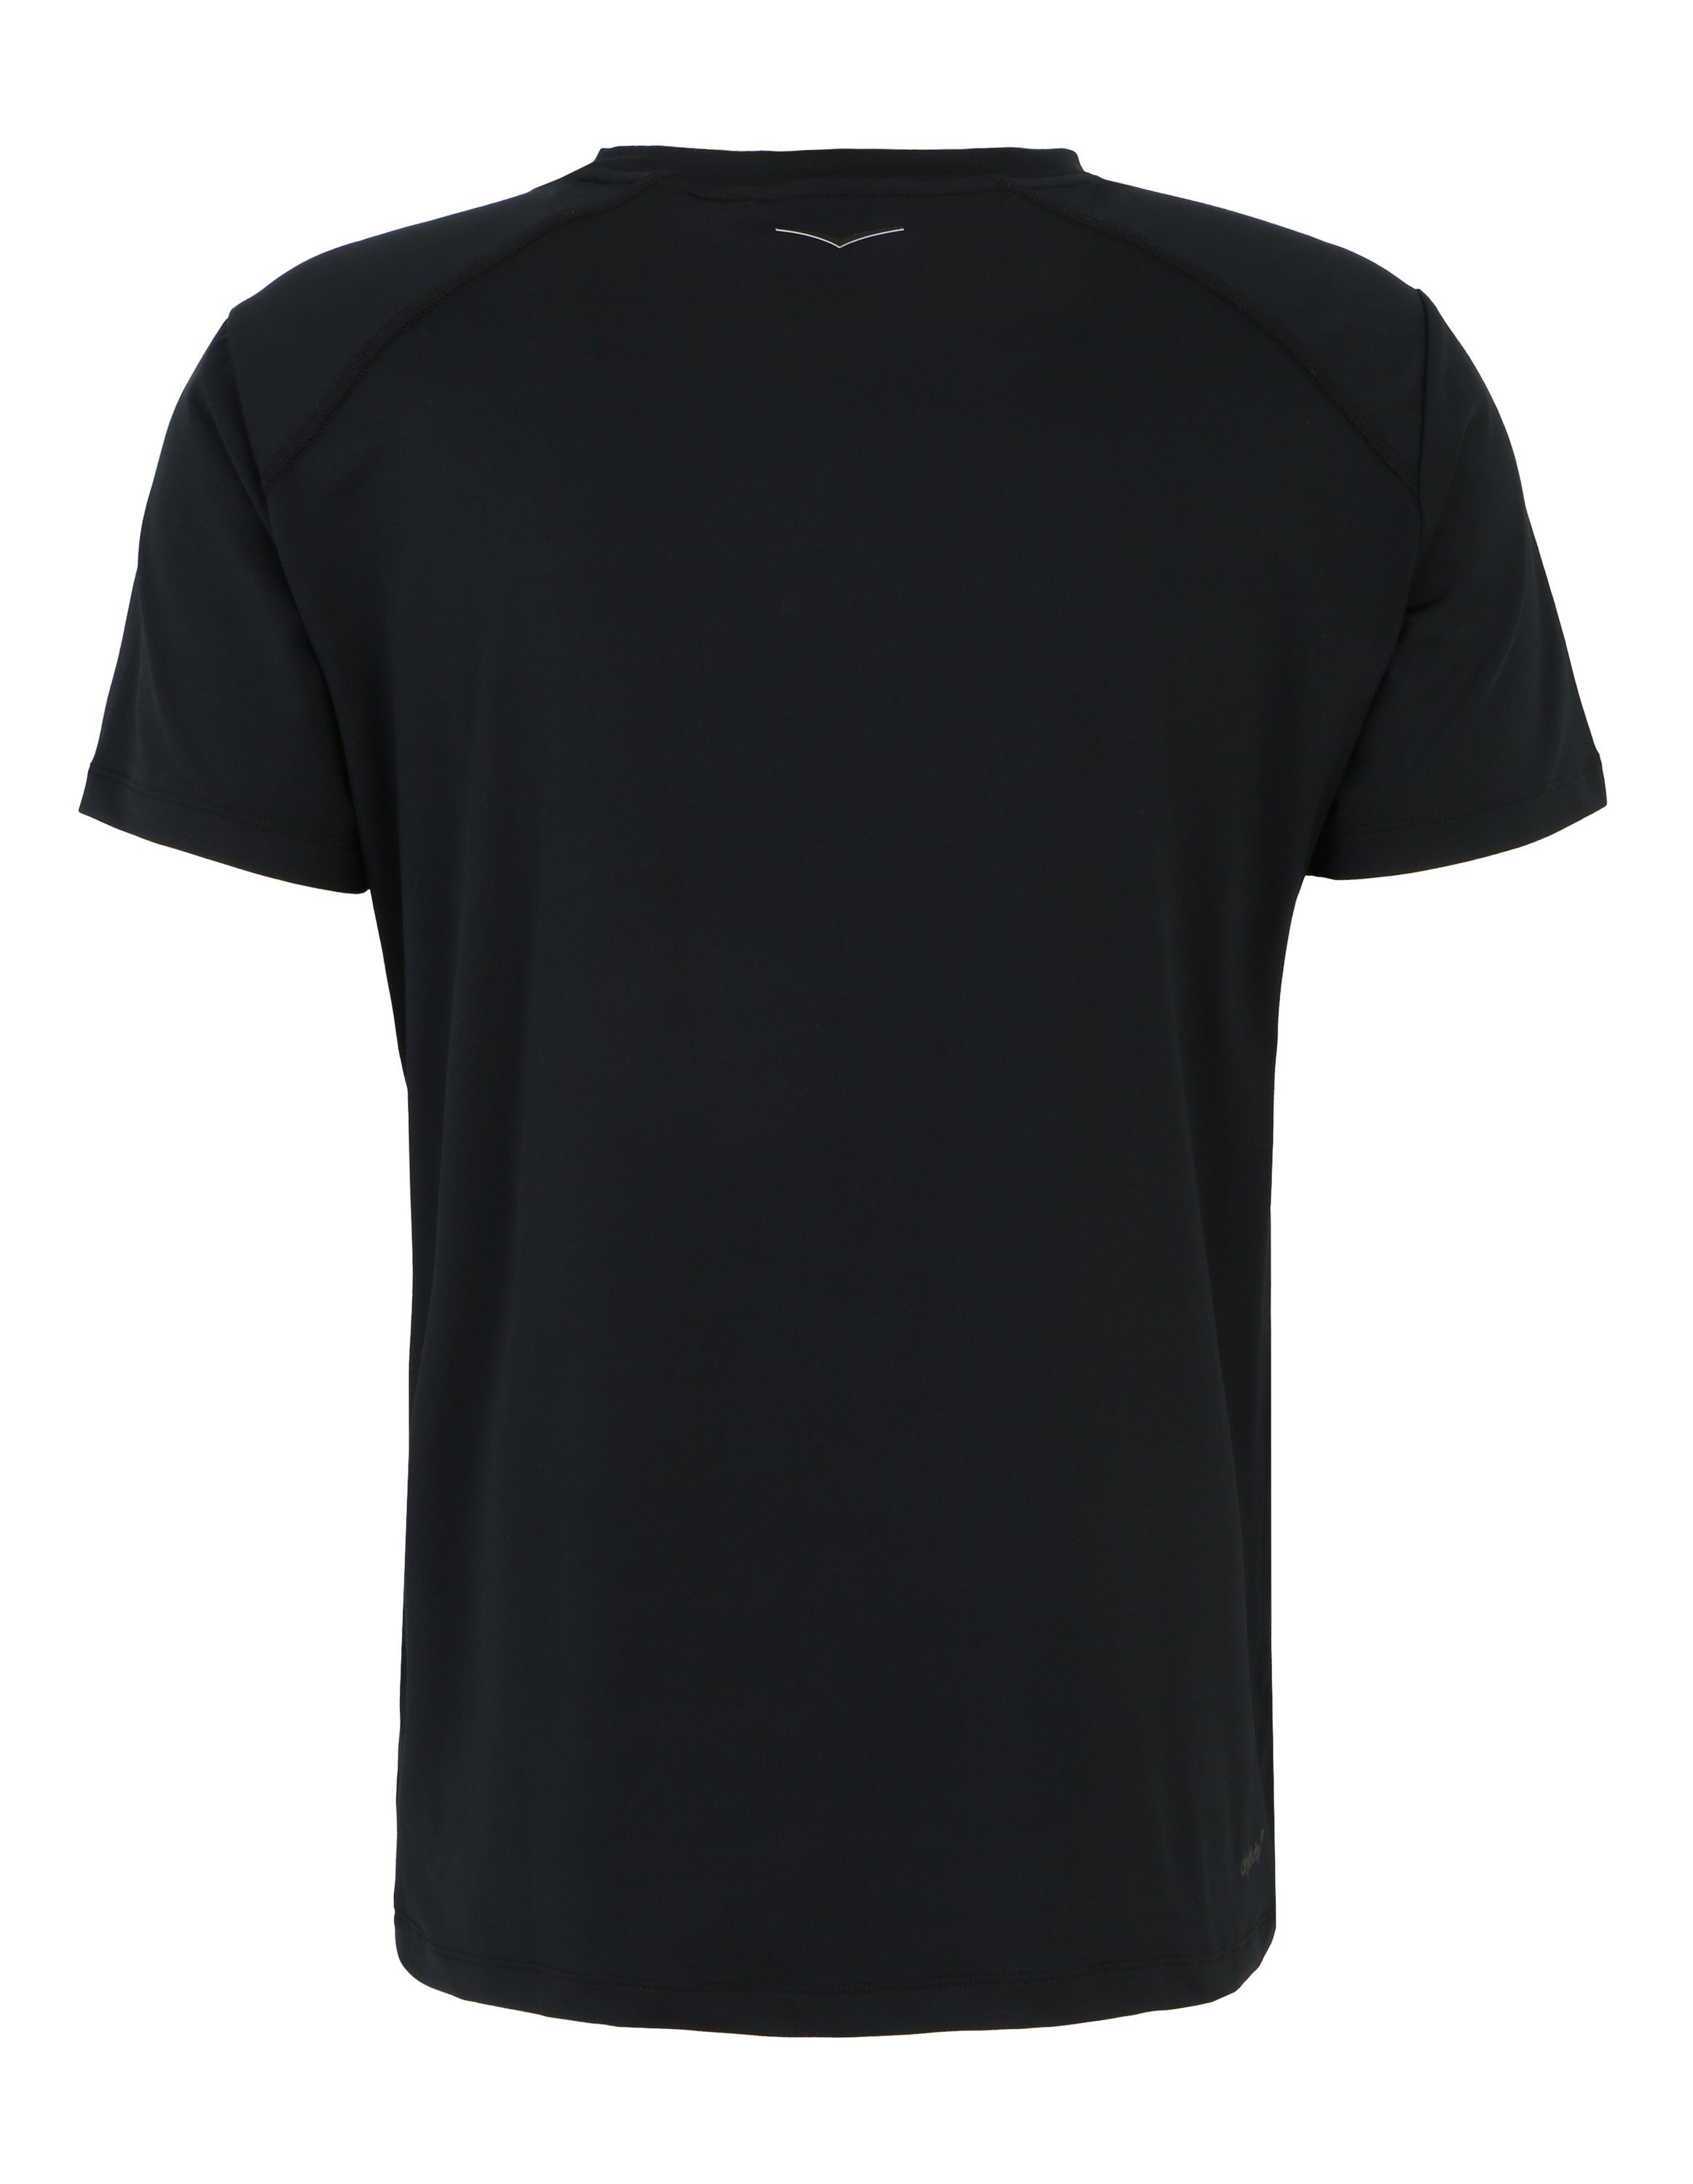 T-Shirt Venice Beach black T-Shirt VBM Hayes